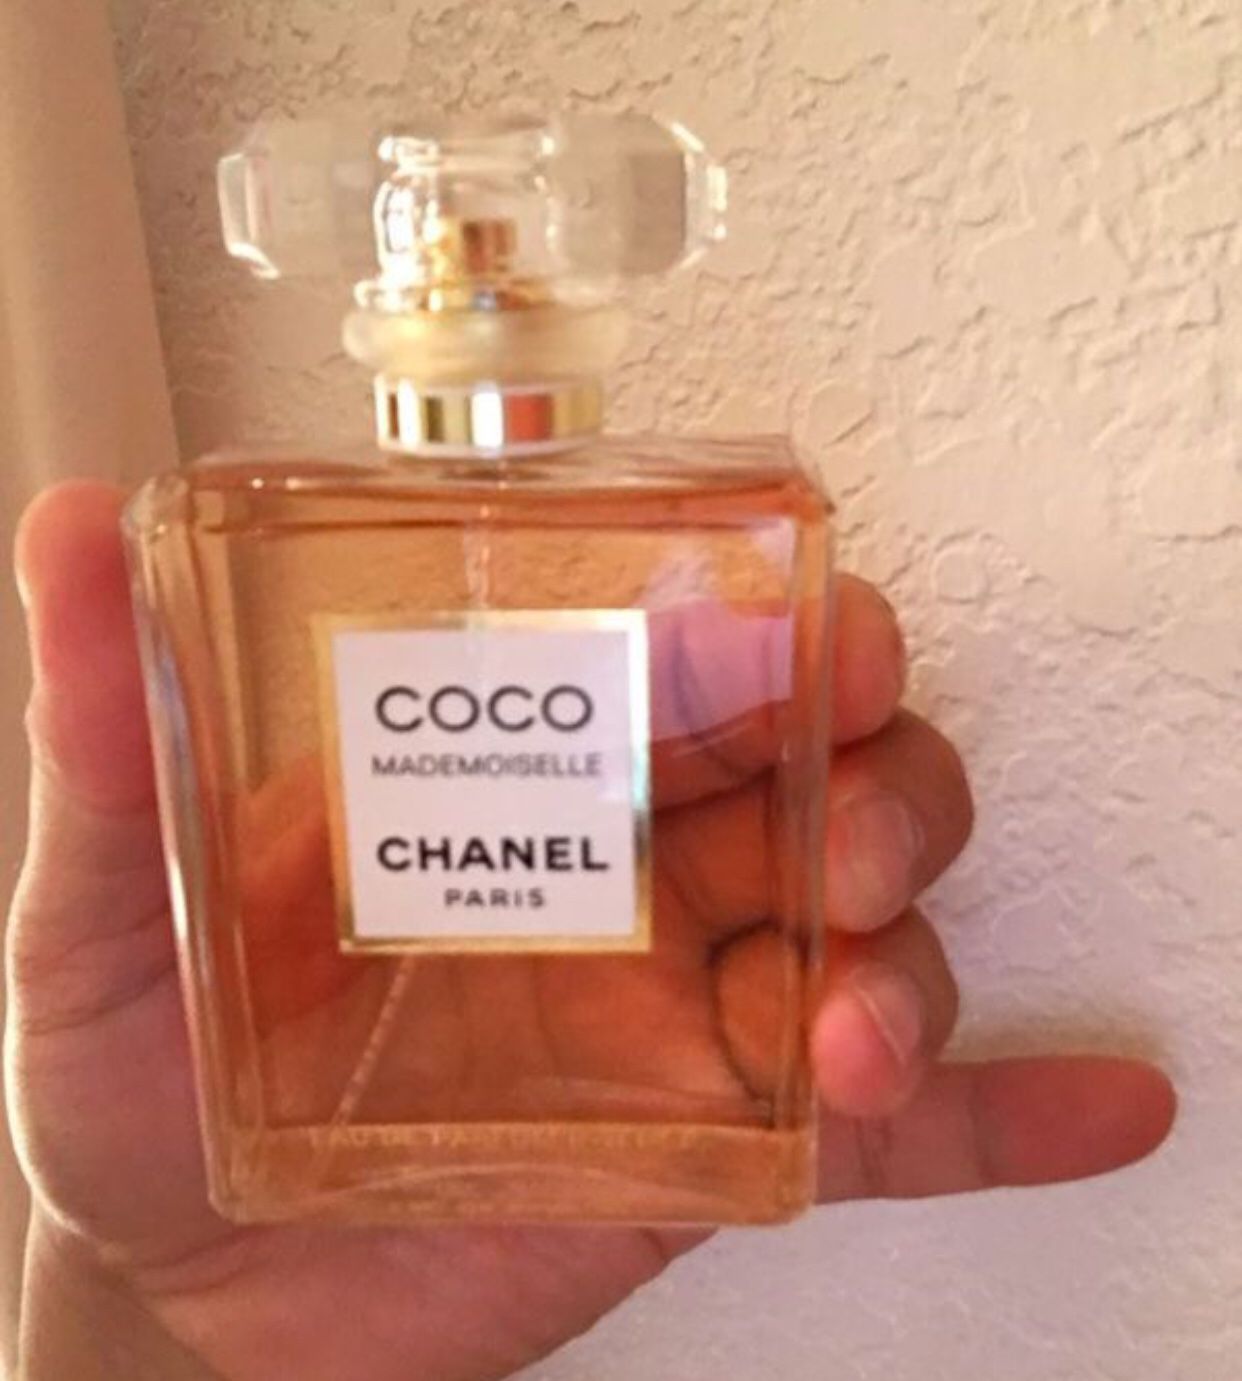 Coco Chanel mademoiselle perfume 3.4oz